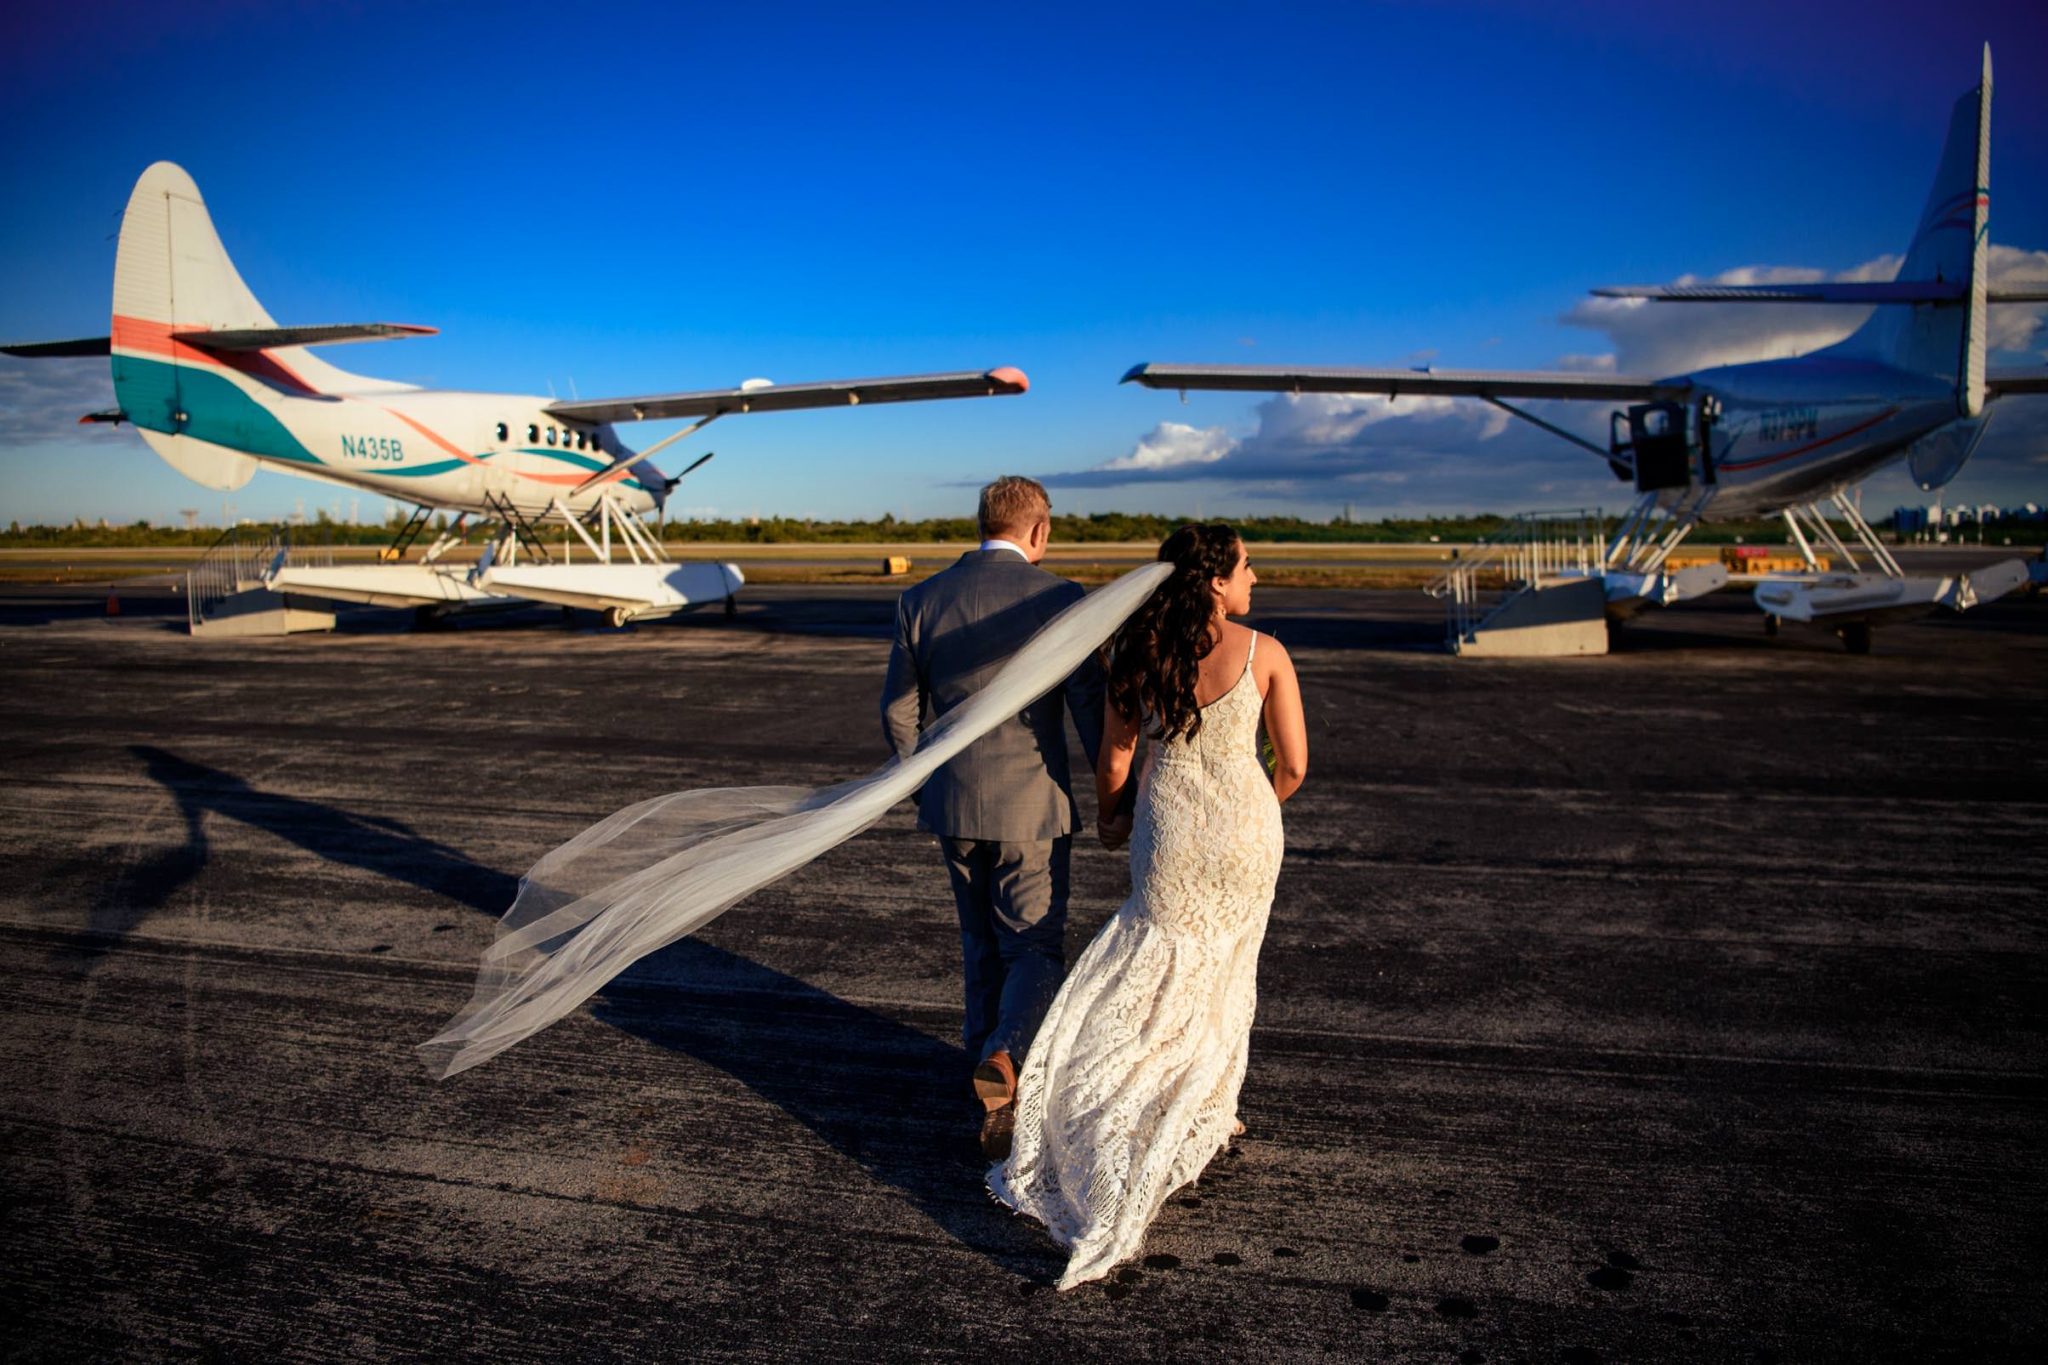 Florida Keys wedding photographer captures bride and groom walking past small planes.